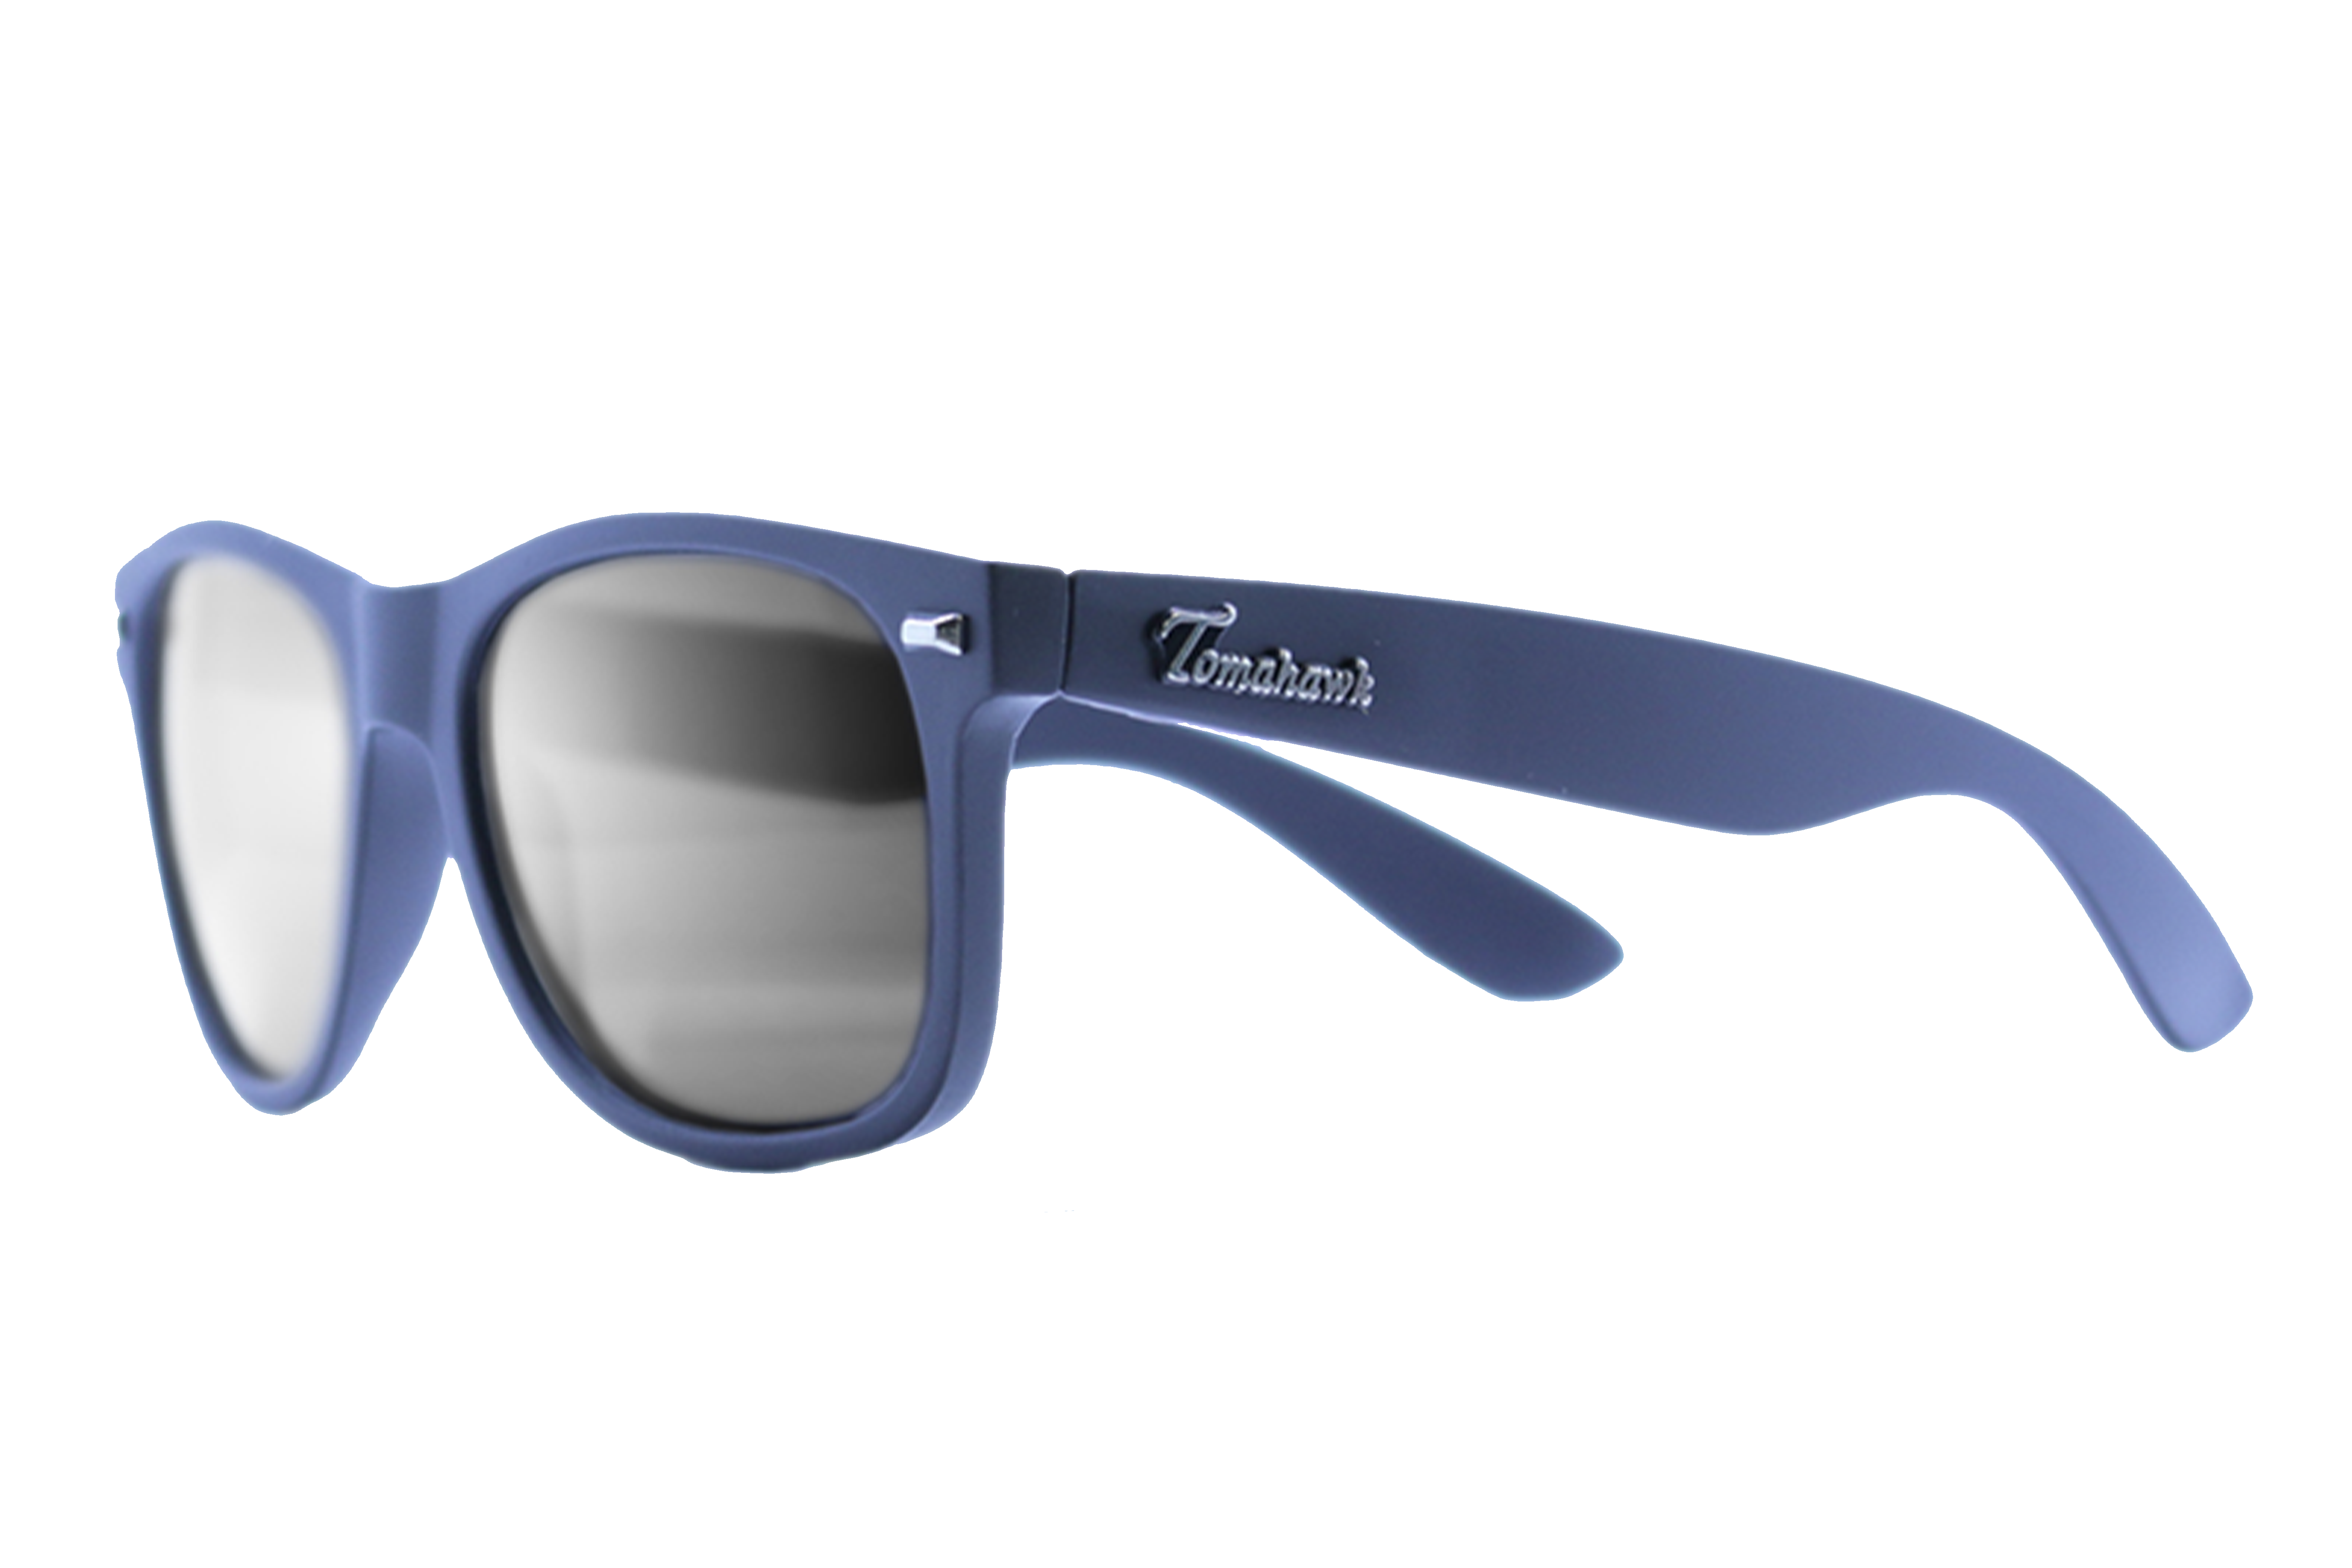 Tomahawk Shades Elite Class Sunglasses for Men & Women - Impact Resist